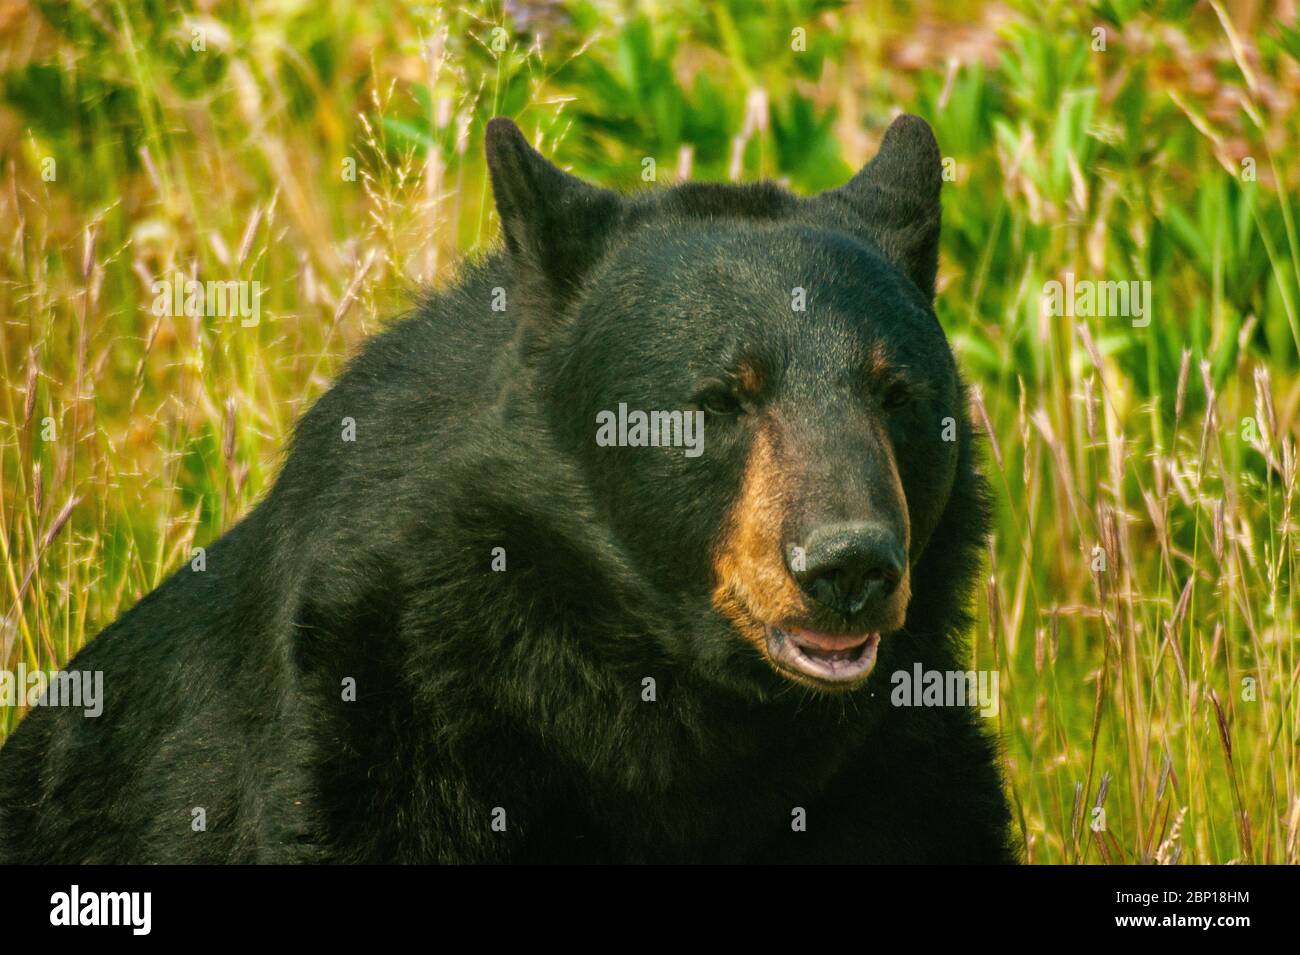 Black Bear in some Grass Stock Photo